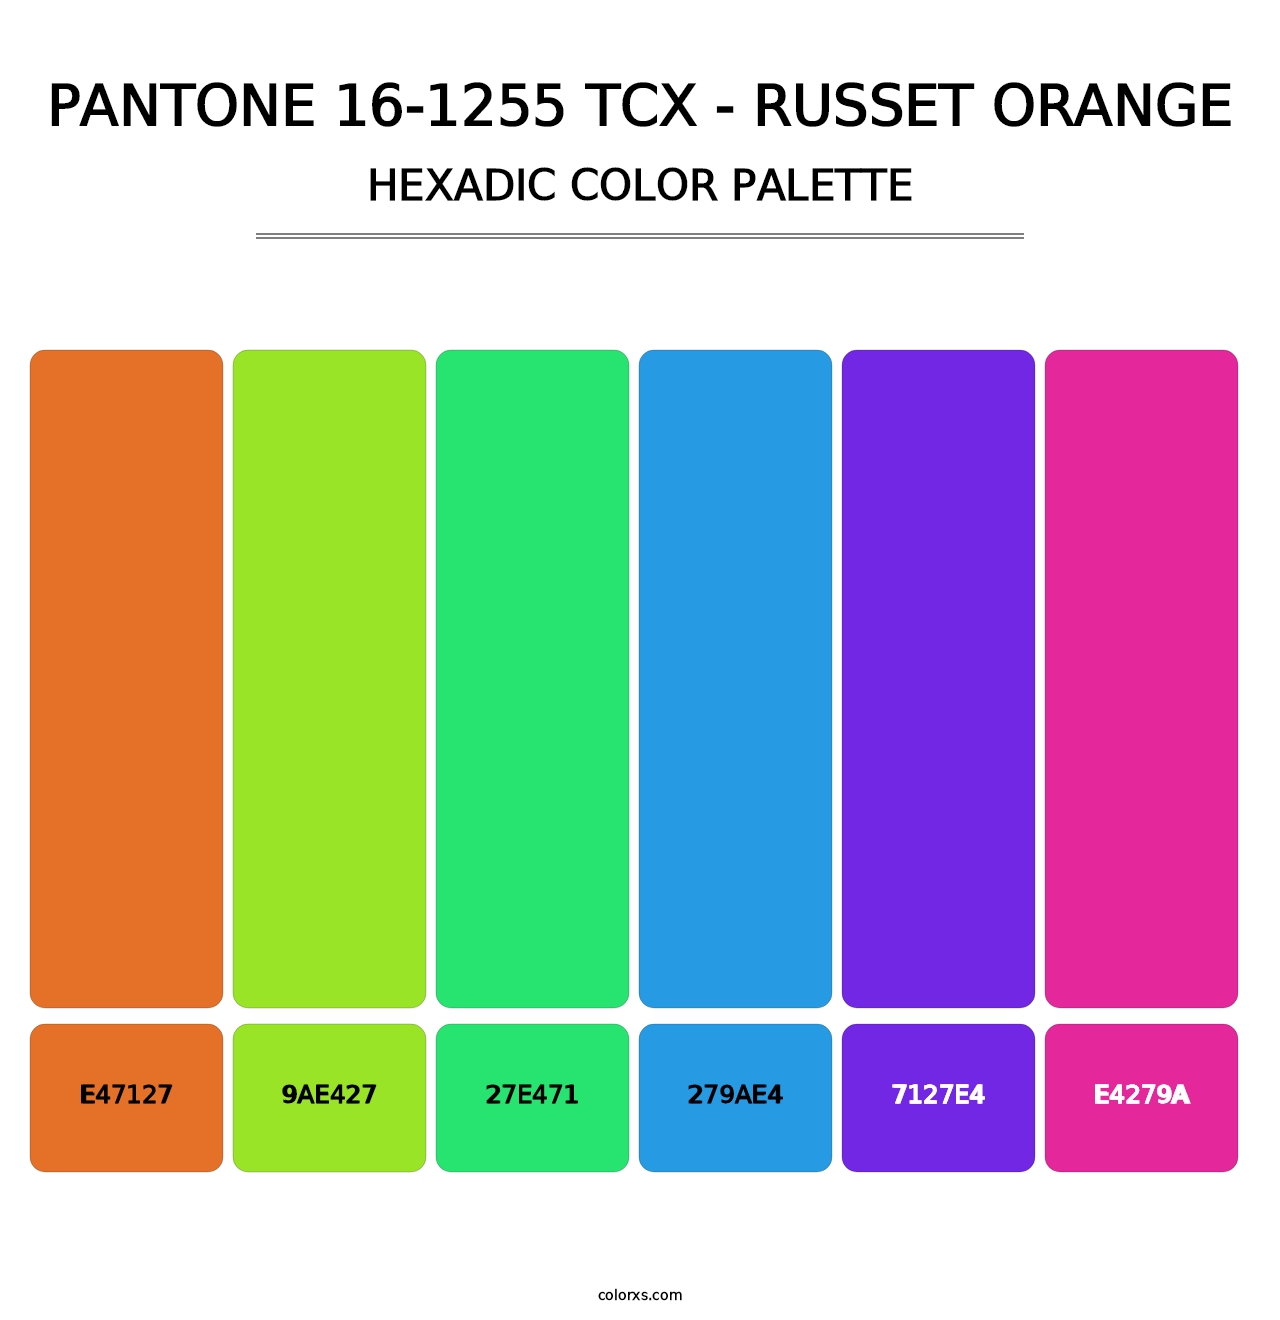 PANTONE 16-1255 TCX - Russet Orange - Hexadic Color Palette